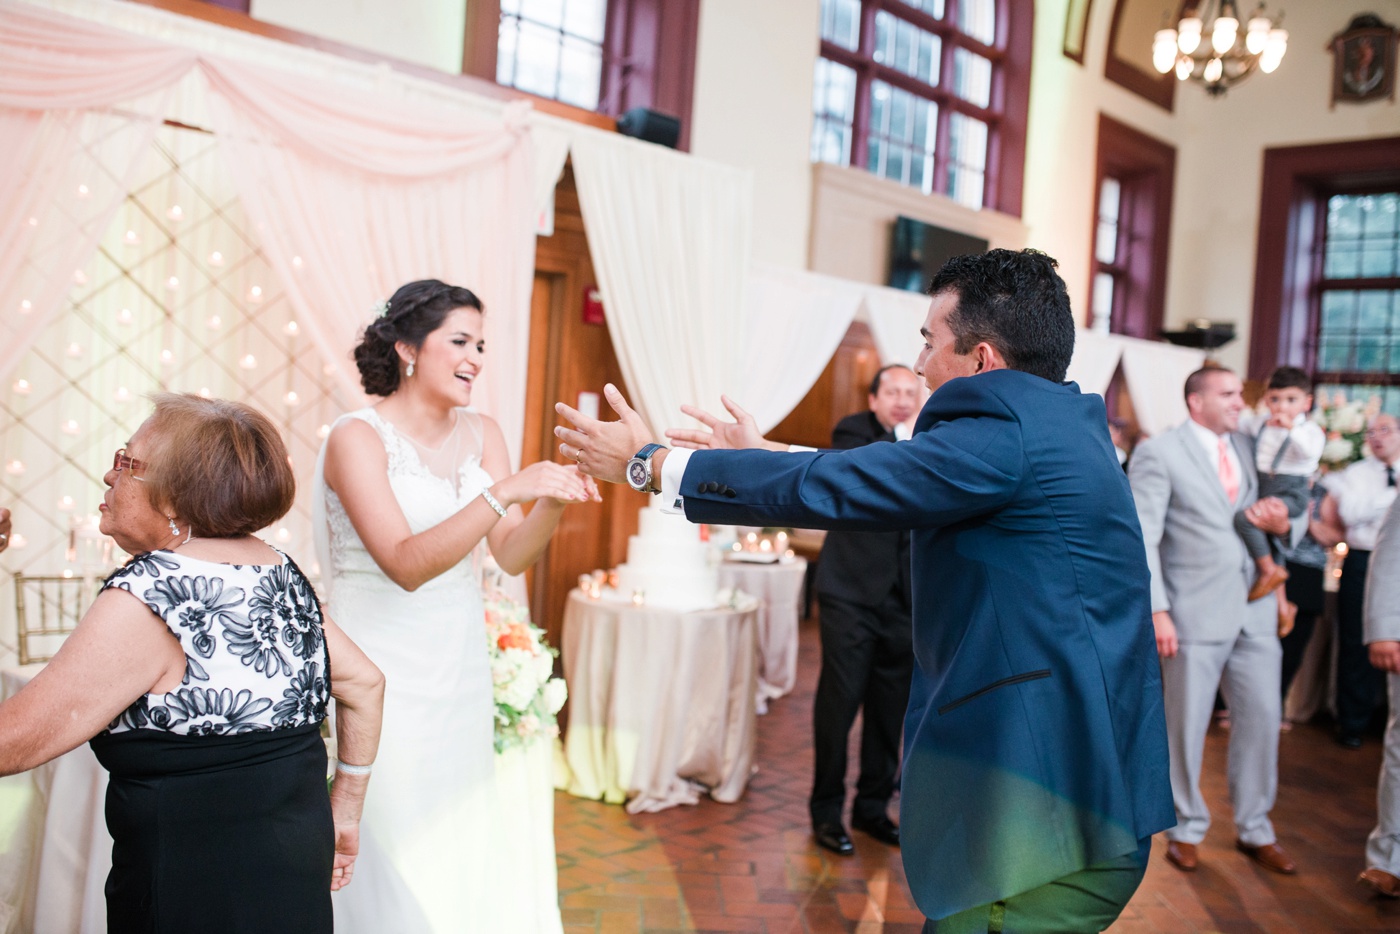 105 - Daniela + Franco - Celebrate at Snug Harbor Wedding - Staten Island New York Wedding Photographer - Alison Dunn Photography photo